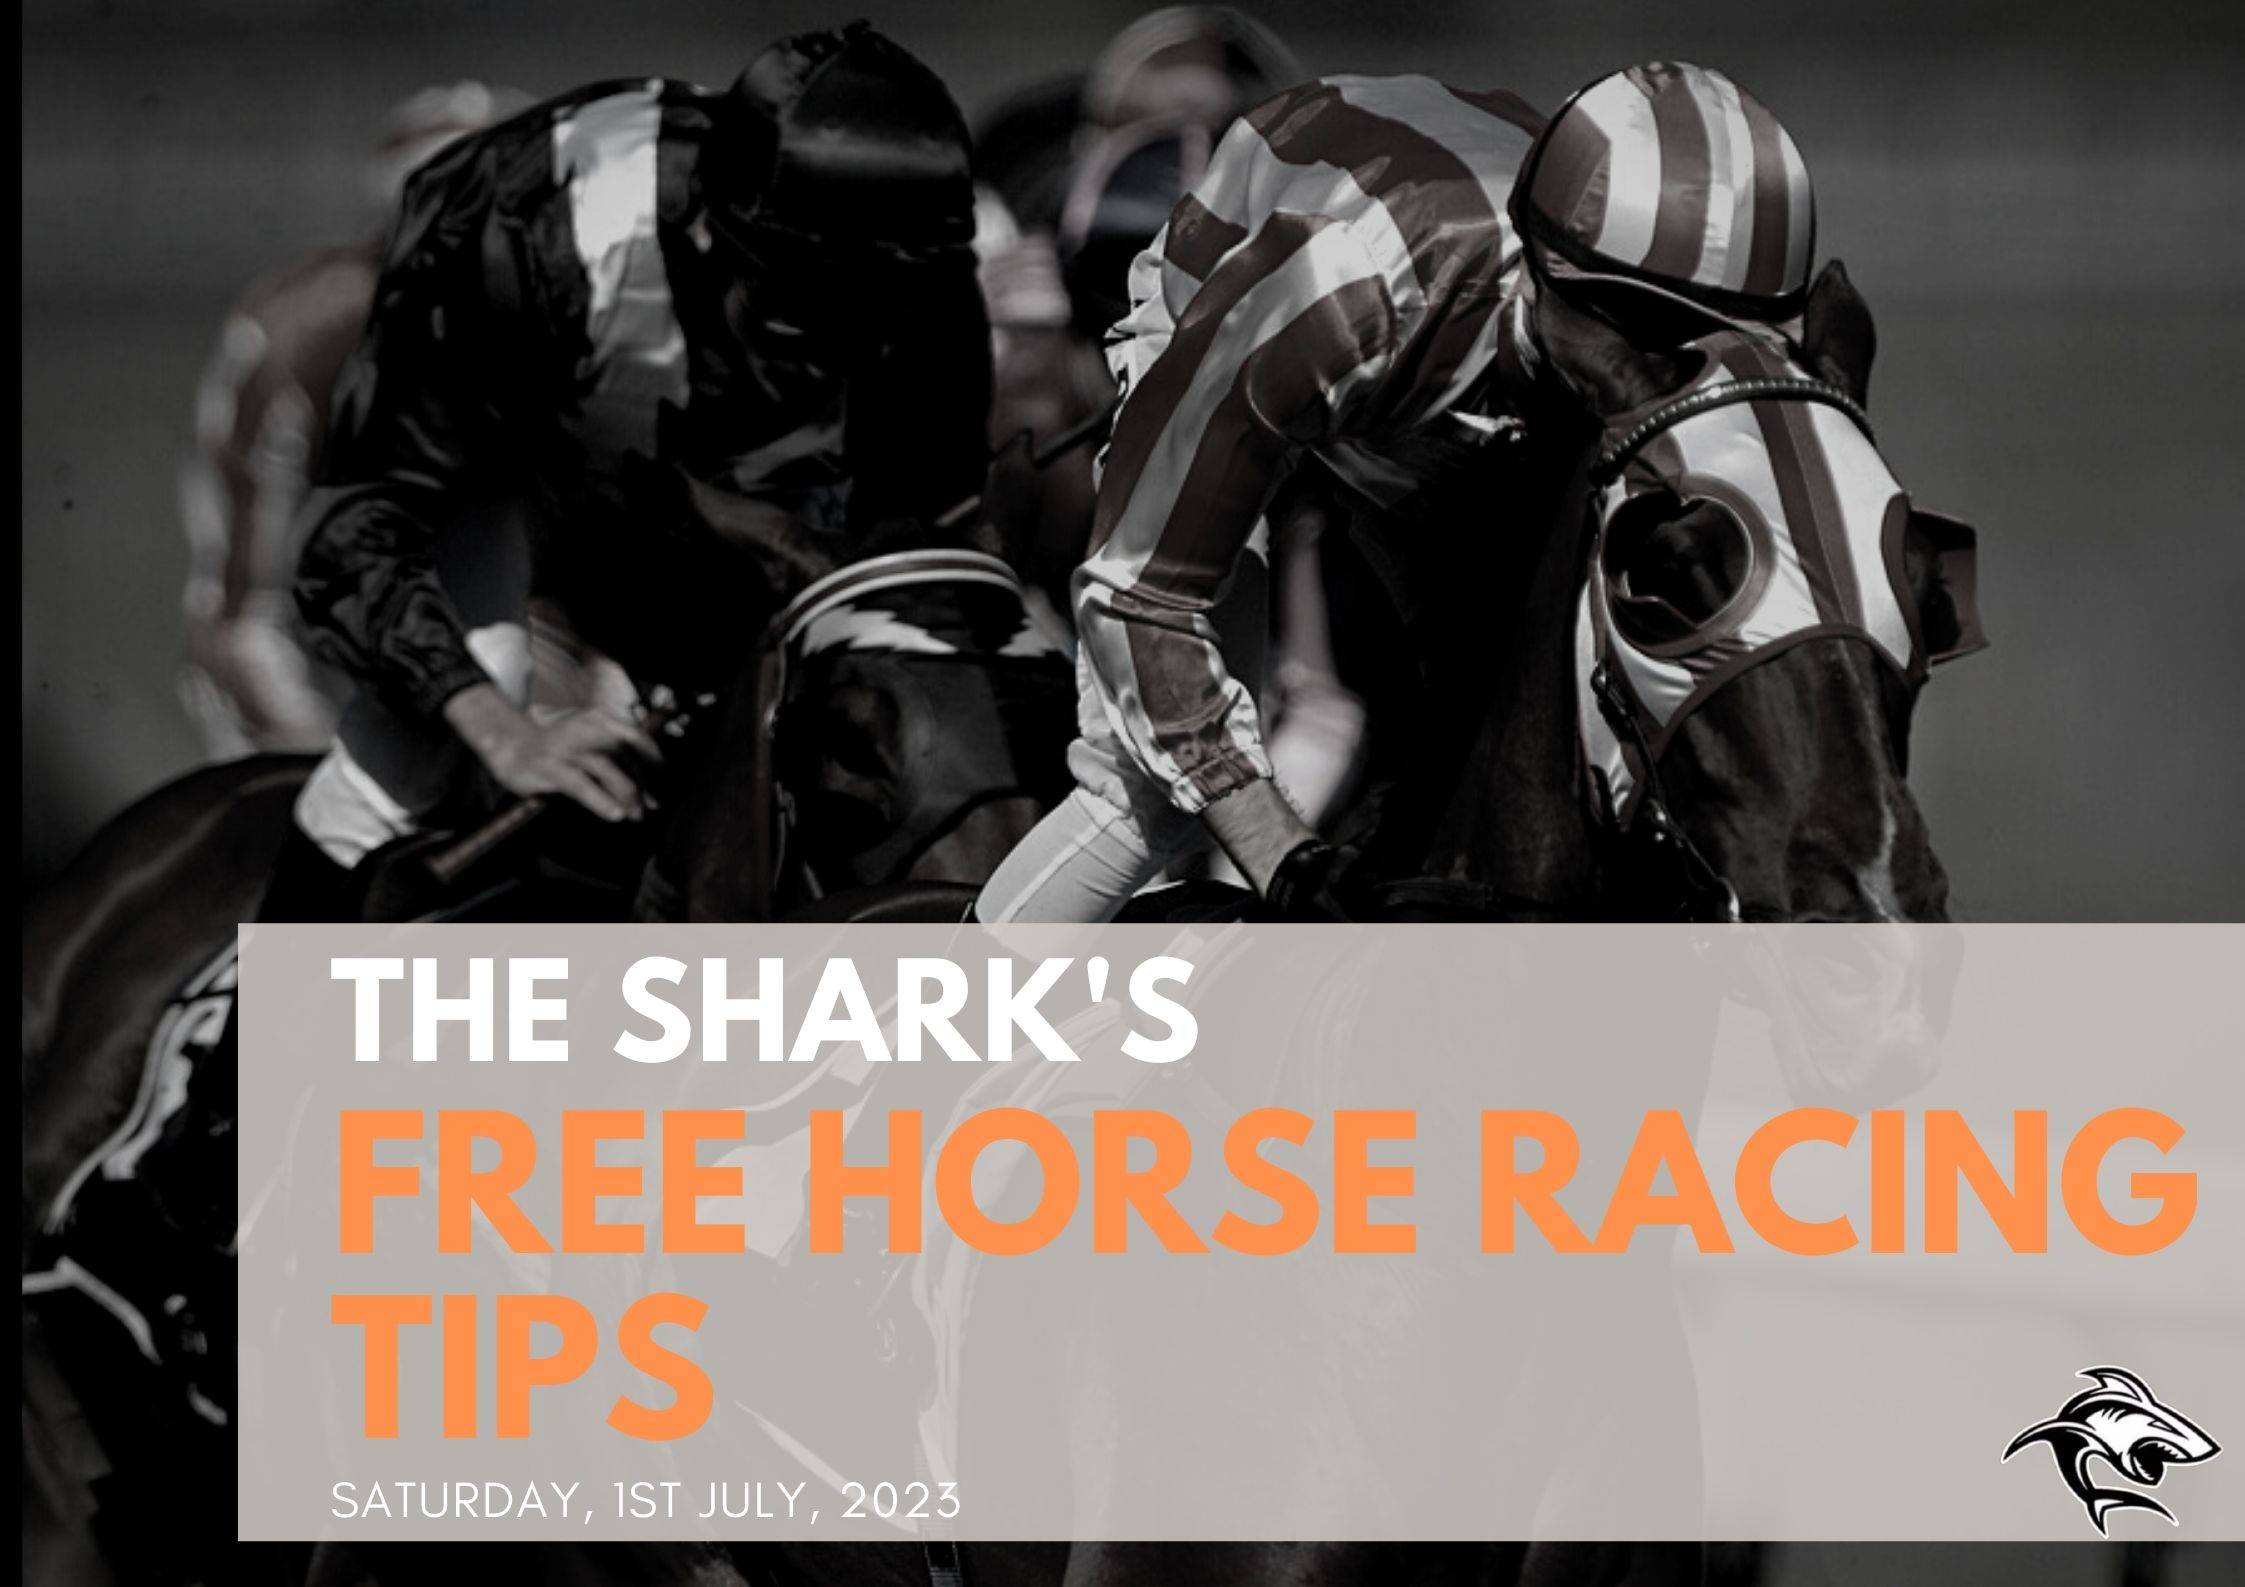 Free Horse Racing Tips - 1st Jul